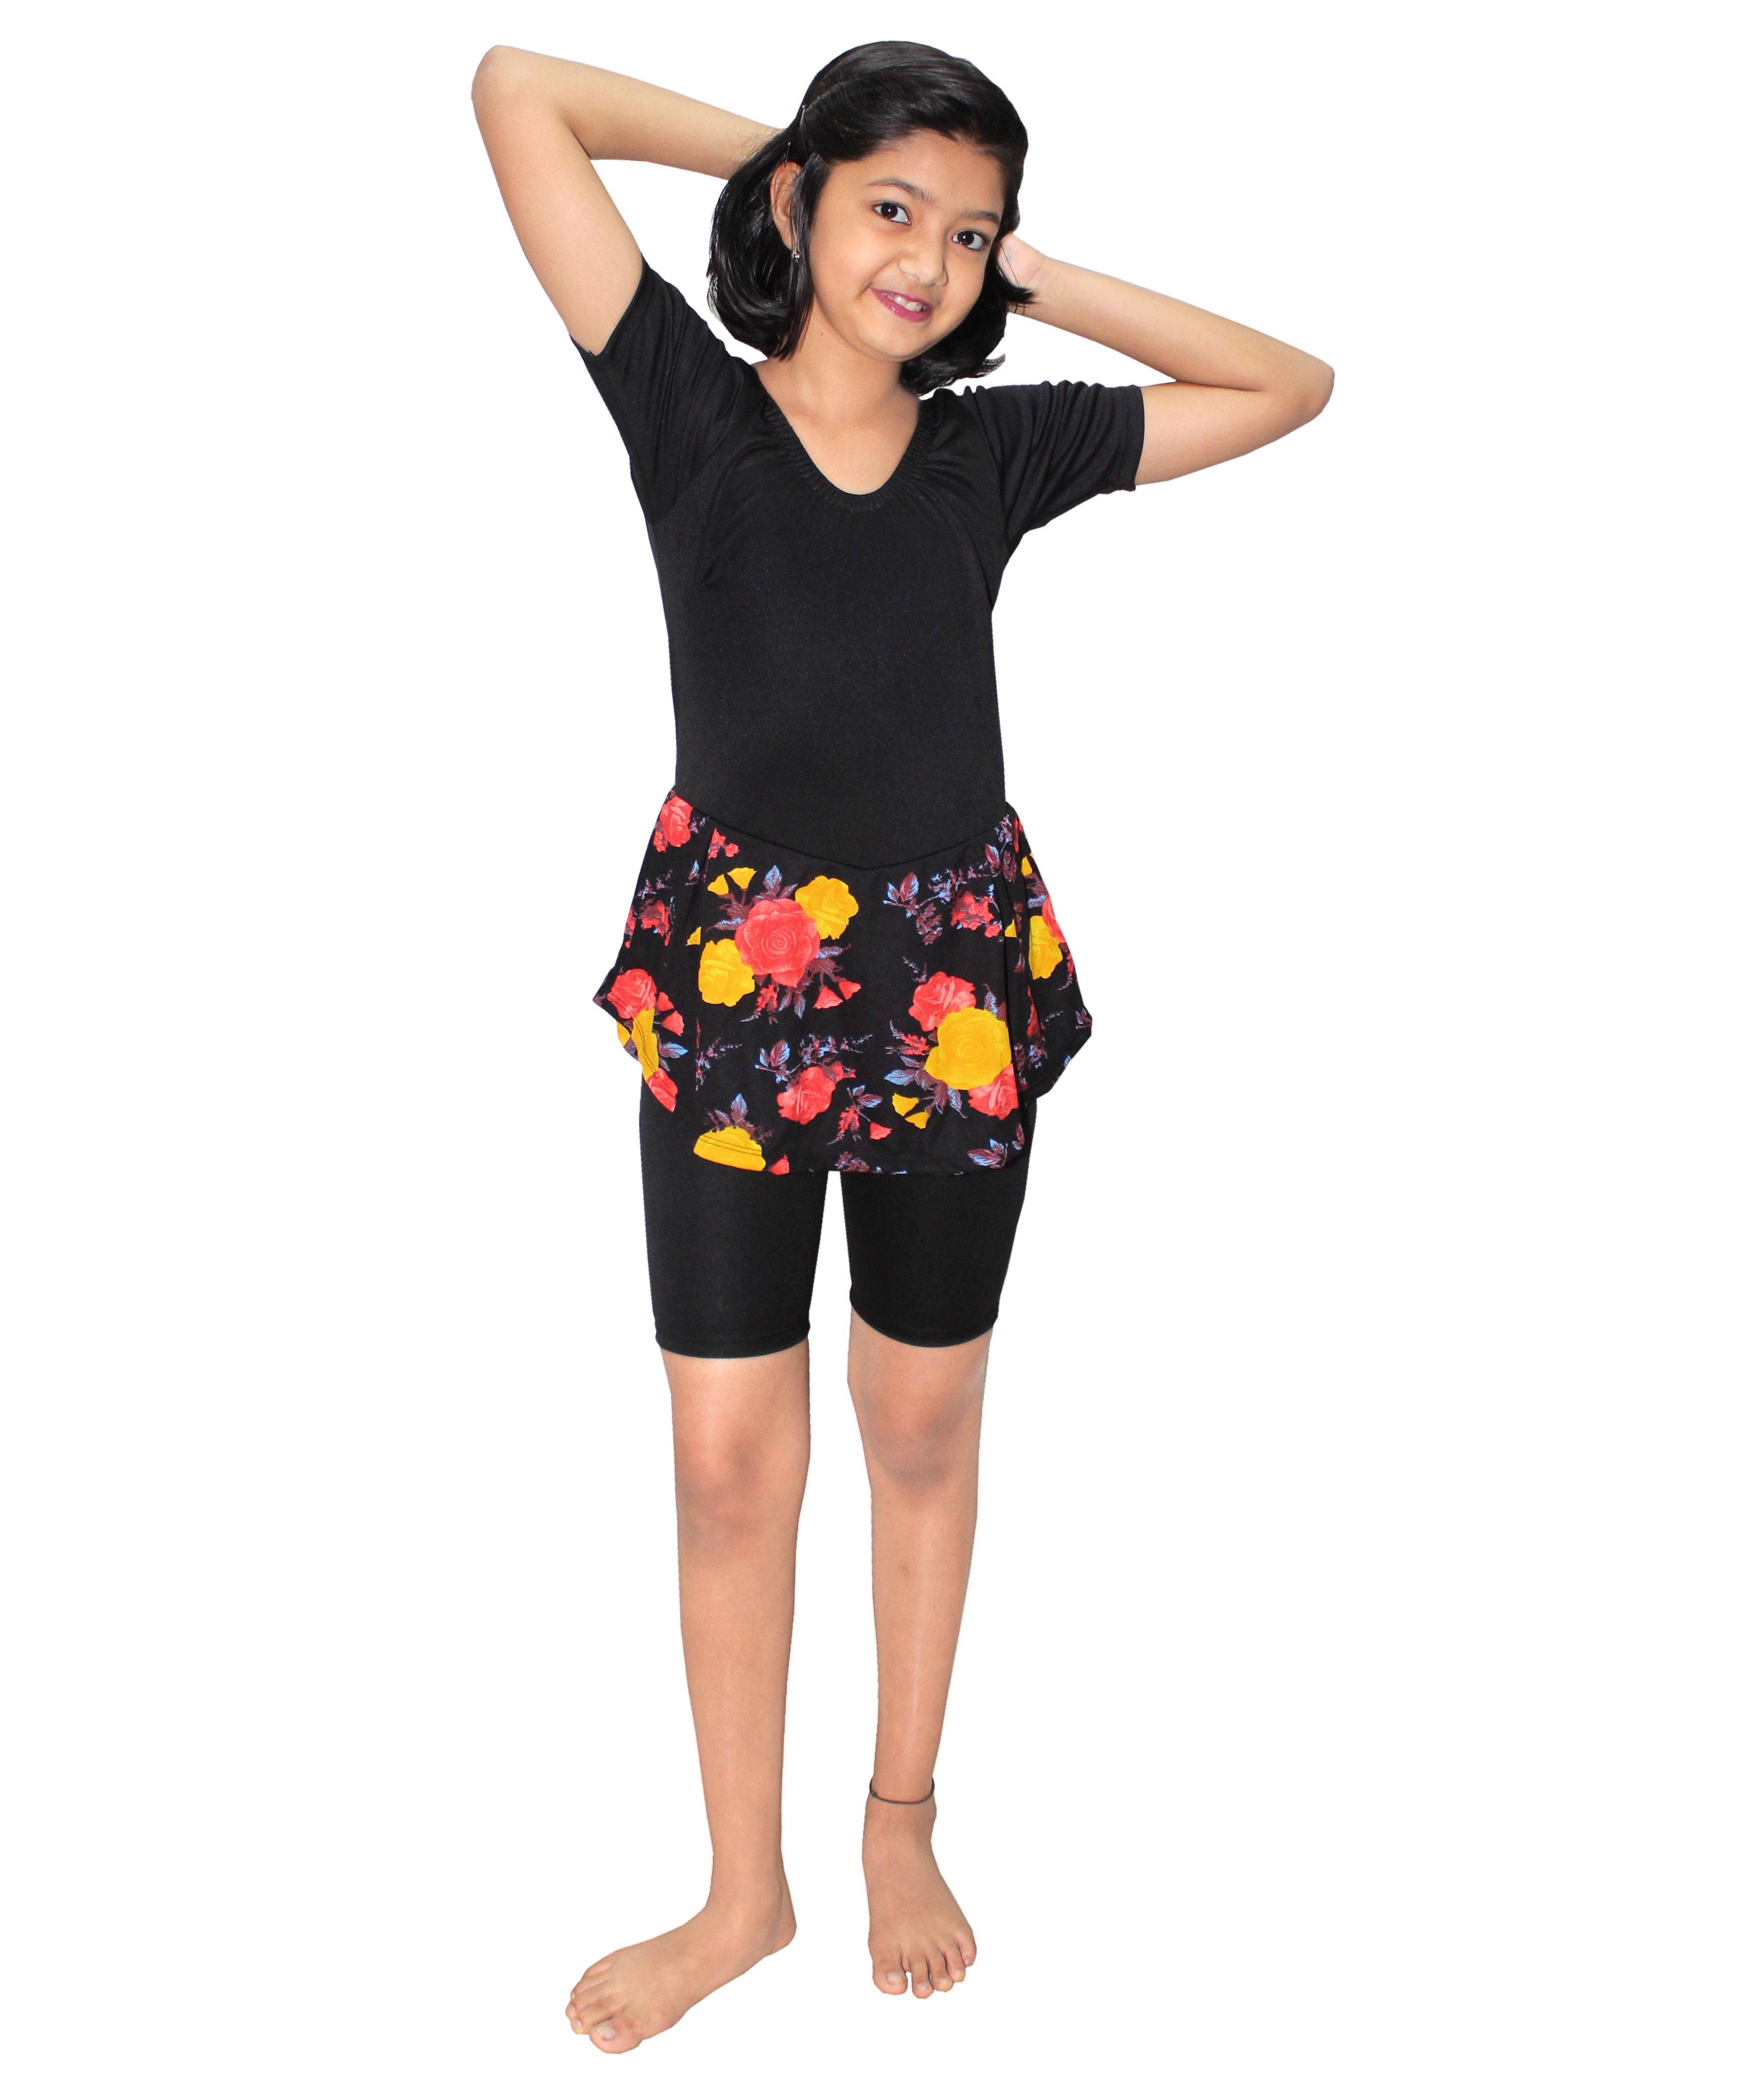 Goodluck Swimming Costume For Kids, Girls Buy Goodluck